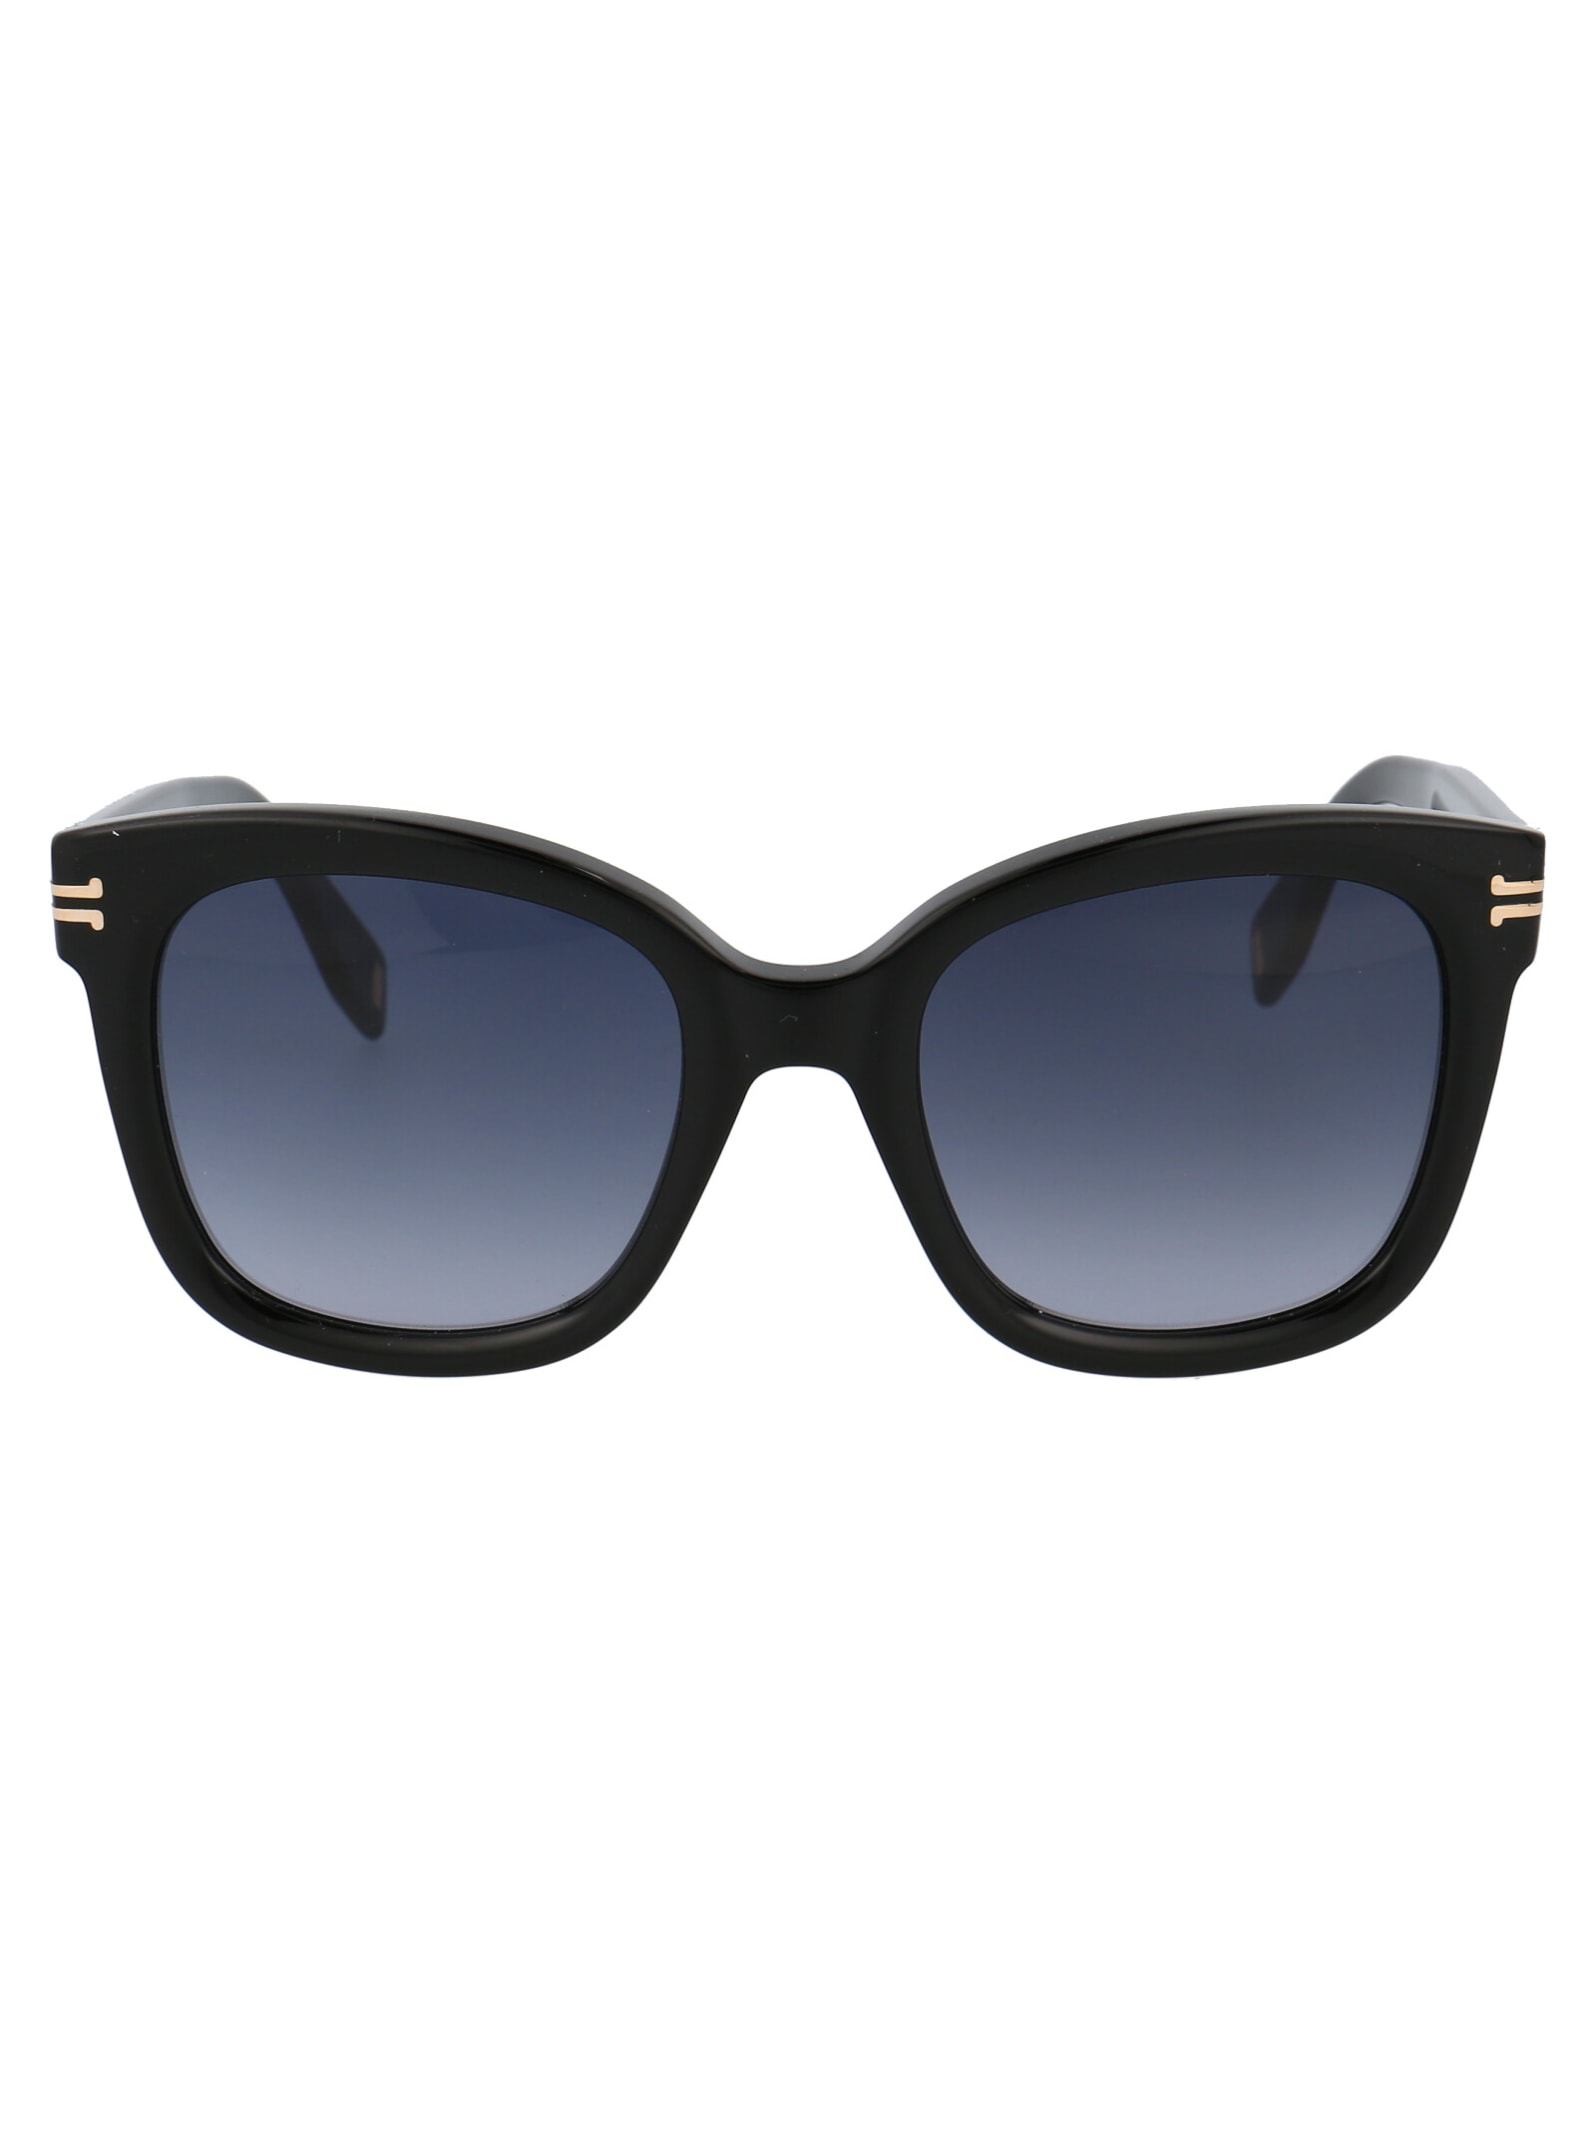 Marc Jacobs Eyewear Mj 1012/s Sunglasses